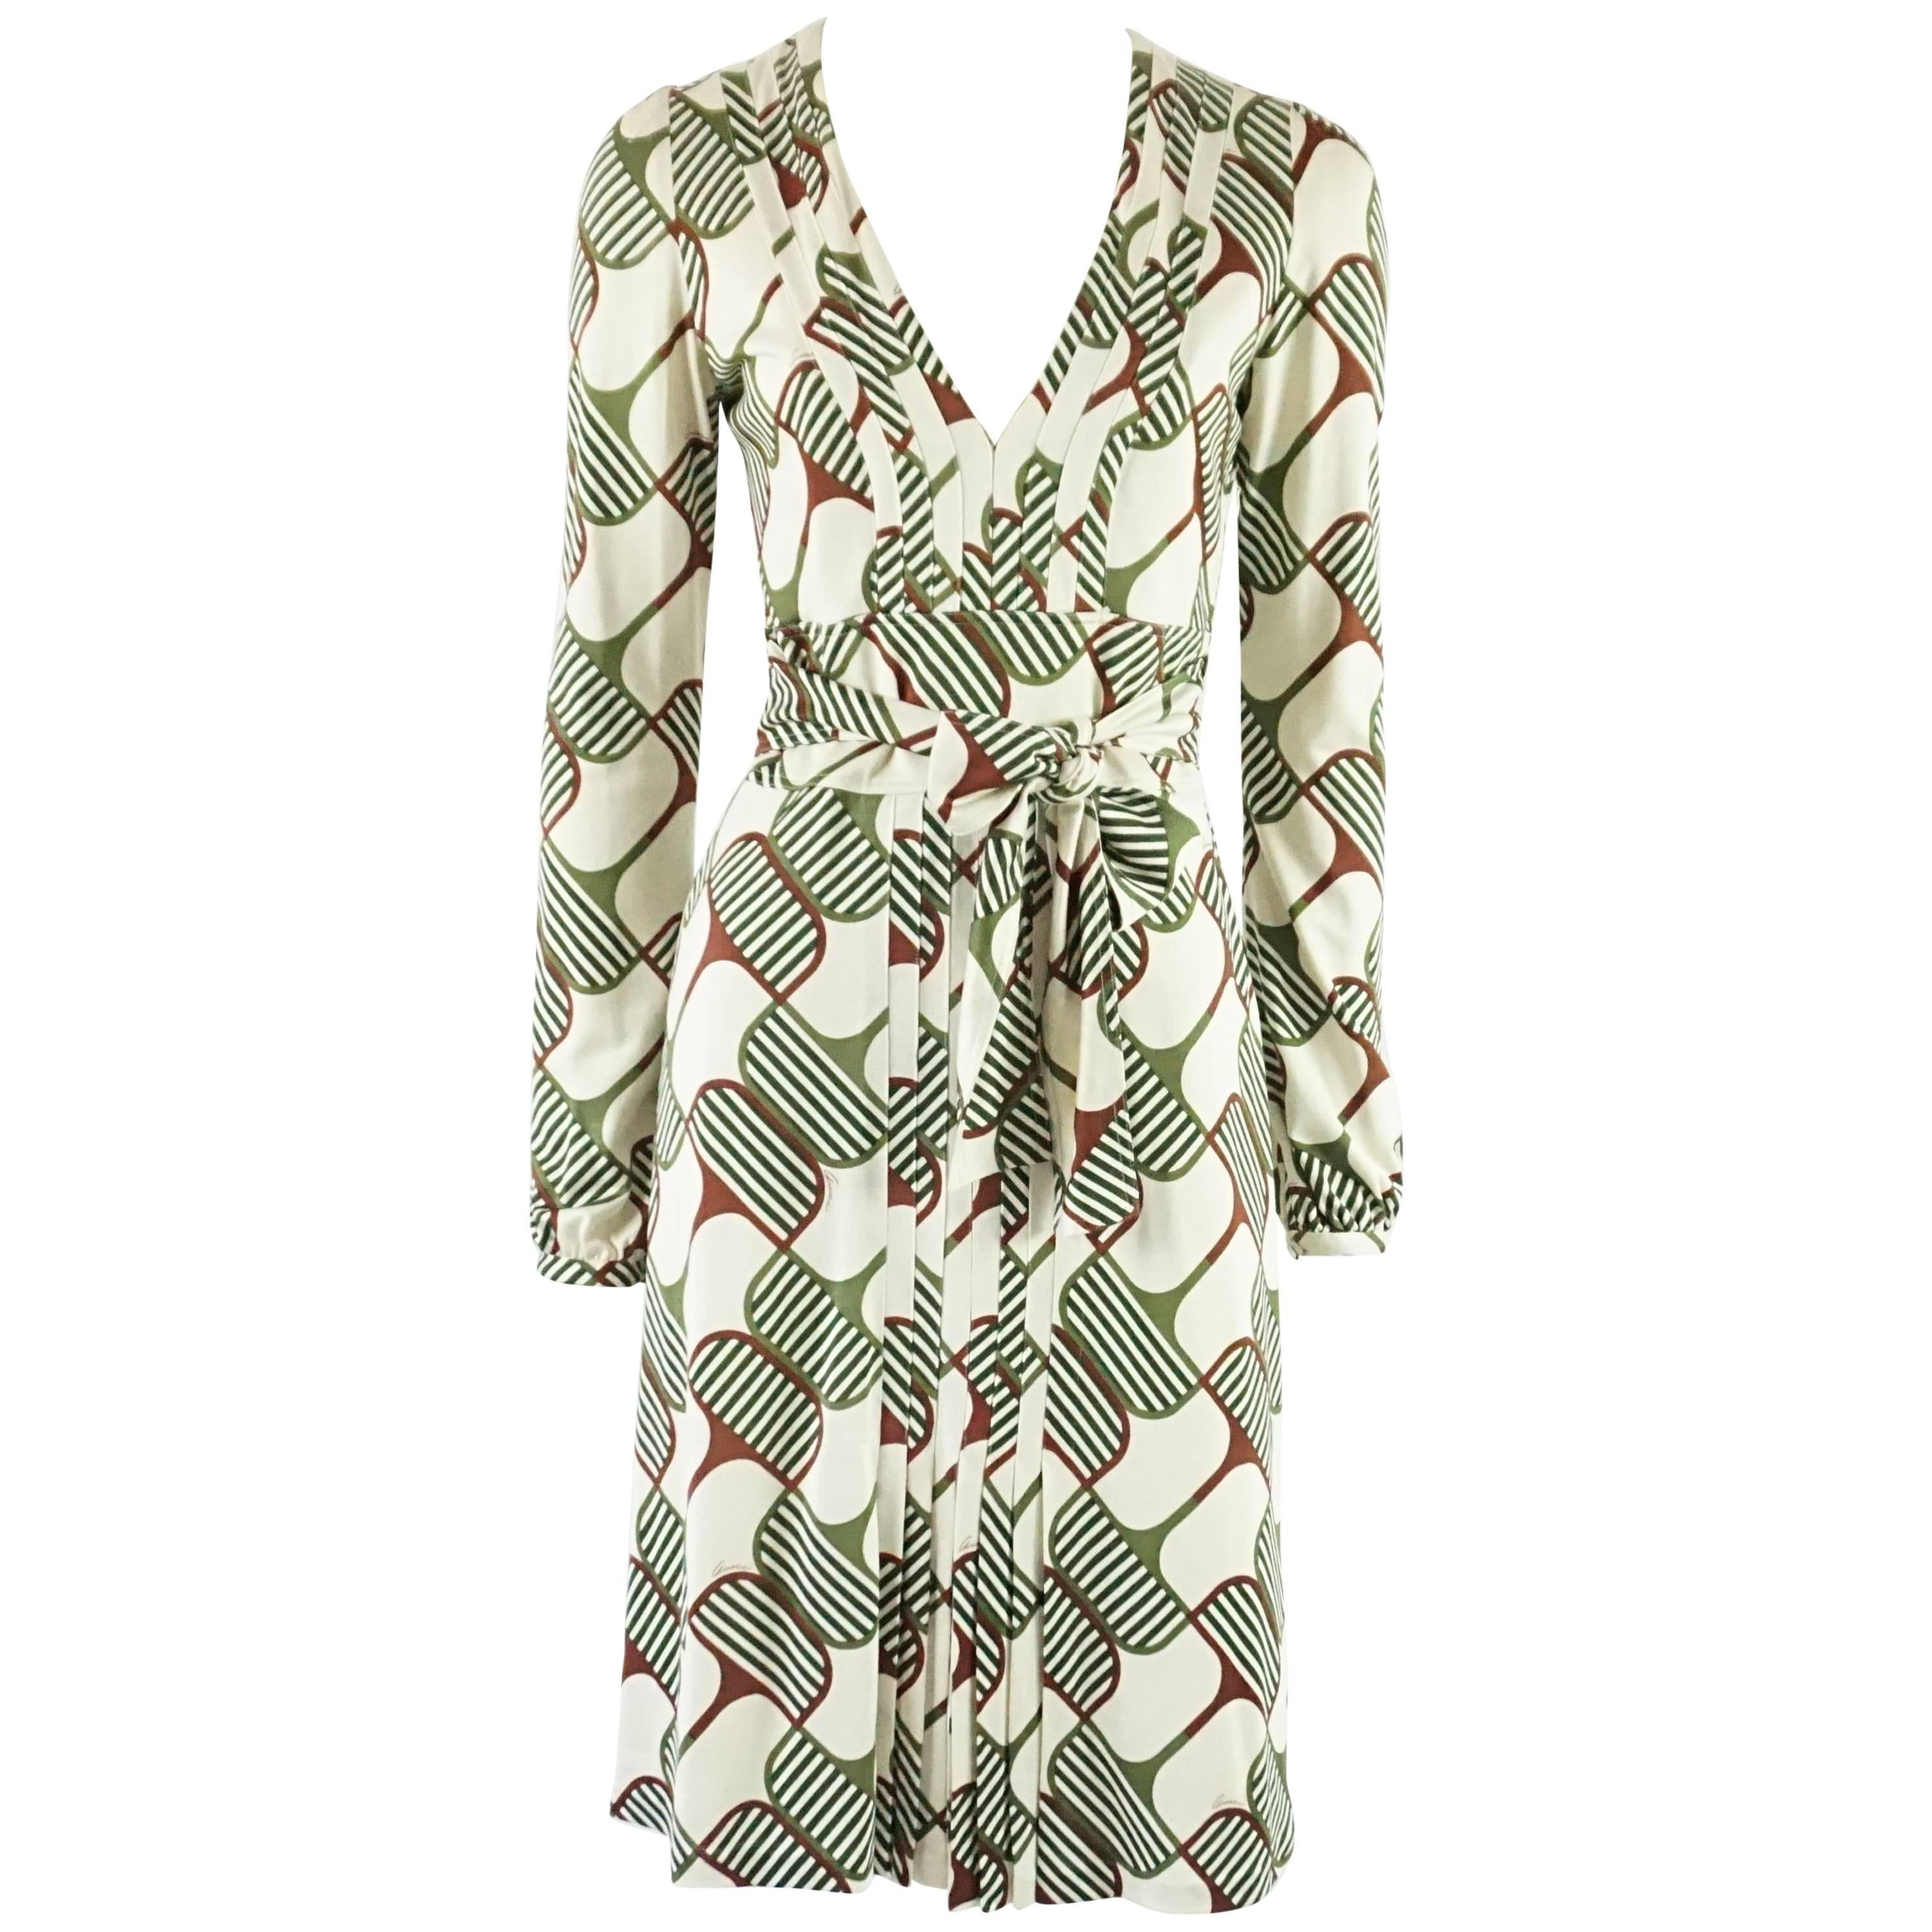 Gucci Ivory and Green Print Silk Knit Dress - Small